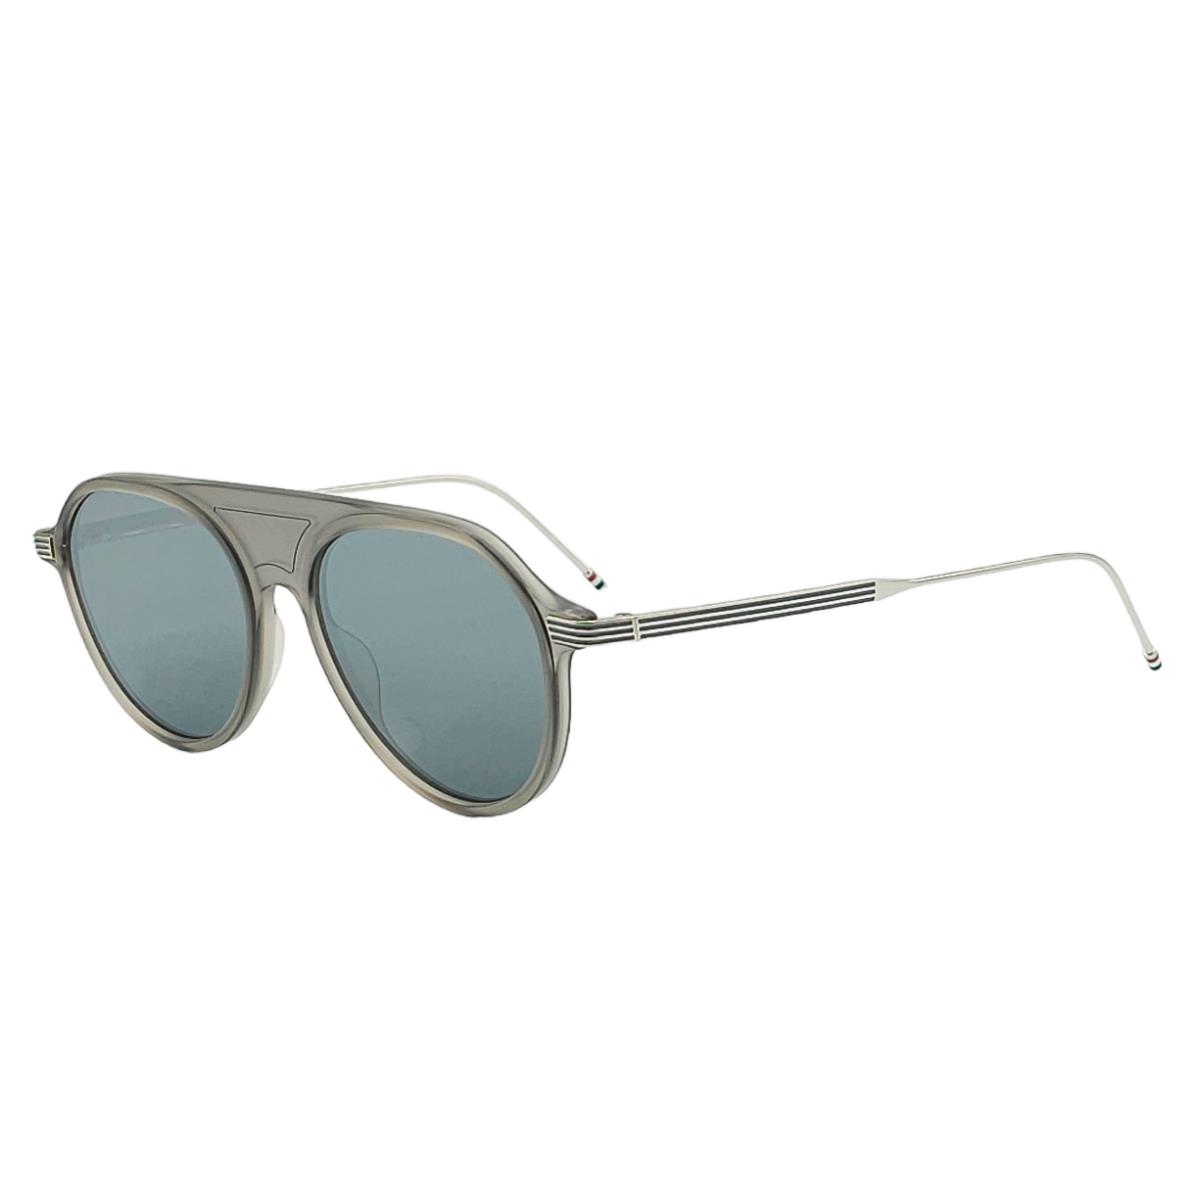 Thom Browne TB809 Sunglasses Color B Gray - Silver / Gray Goldtone Mirror